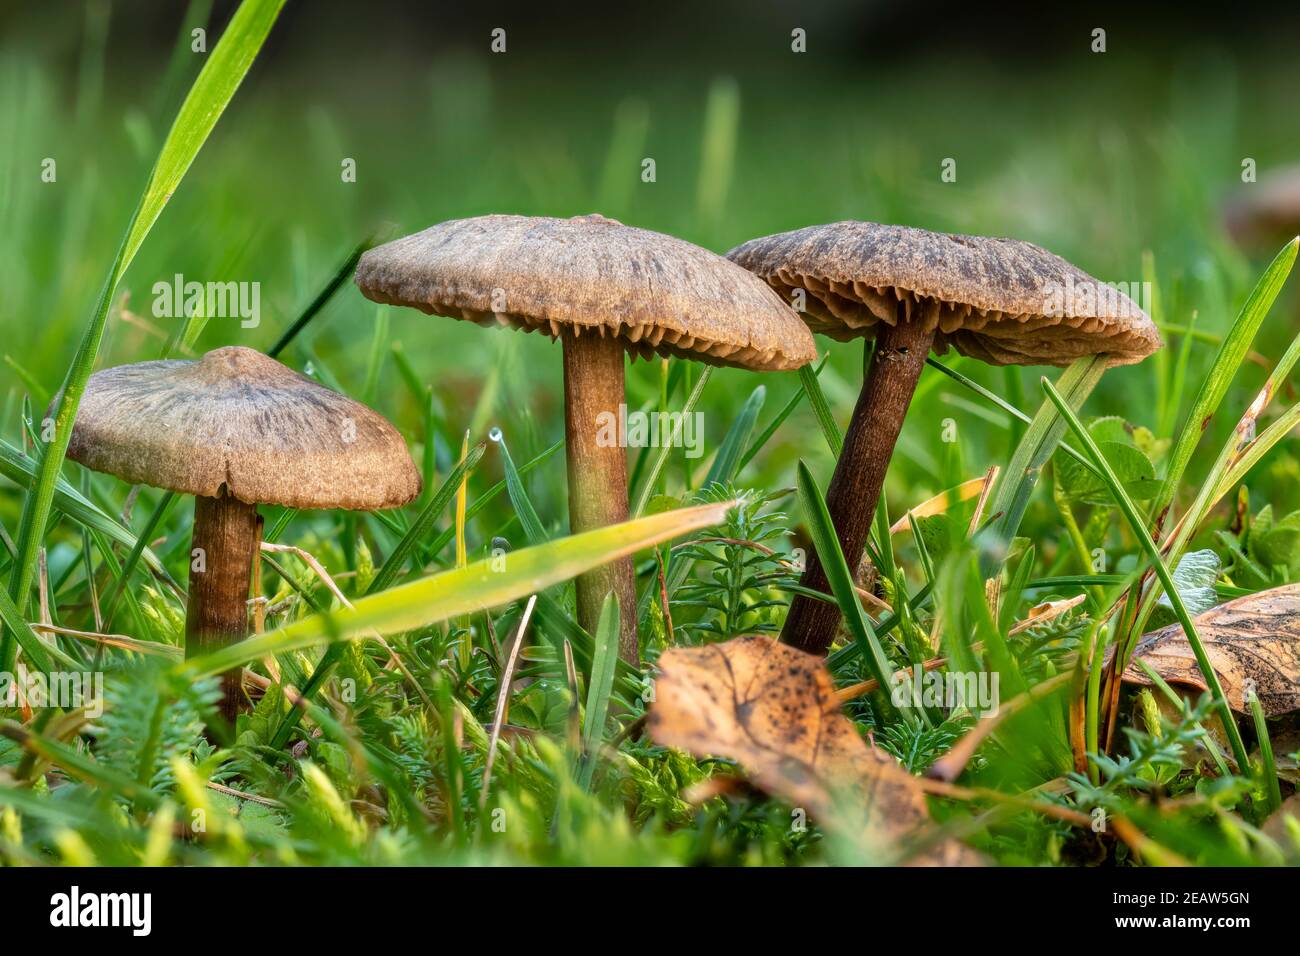 Small brown slimy lamellar mushrooms on the lawn Stock Photo